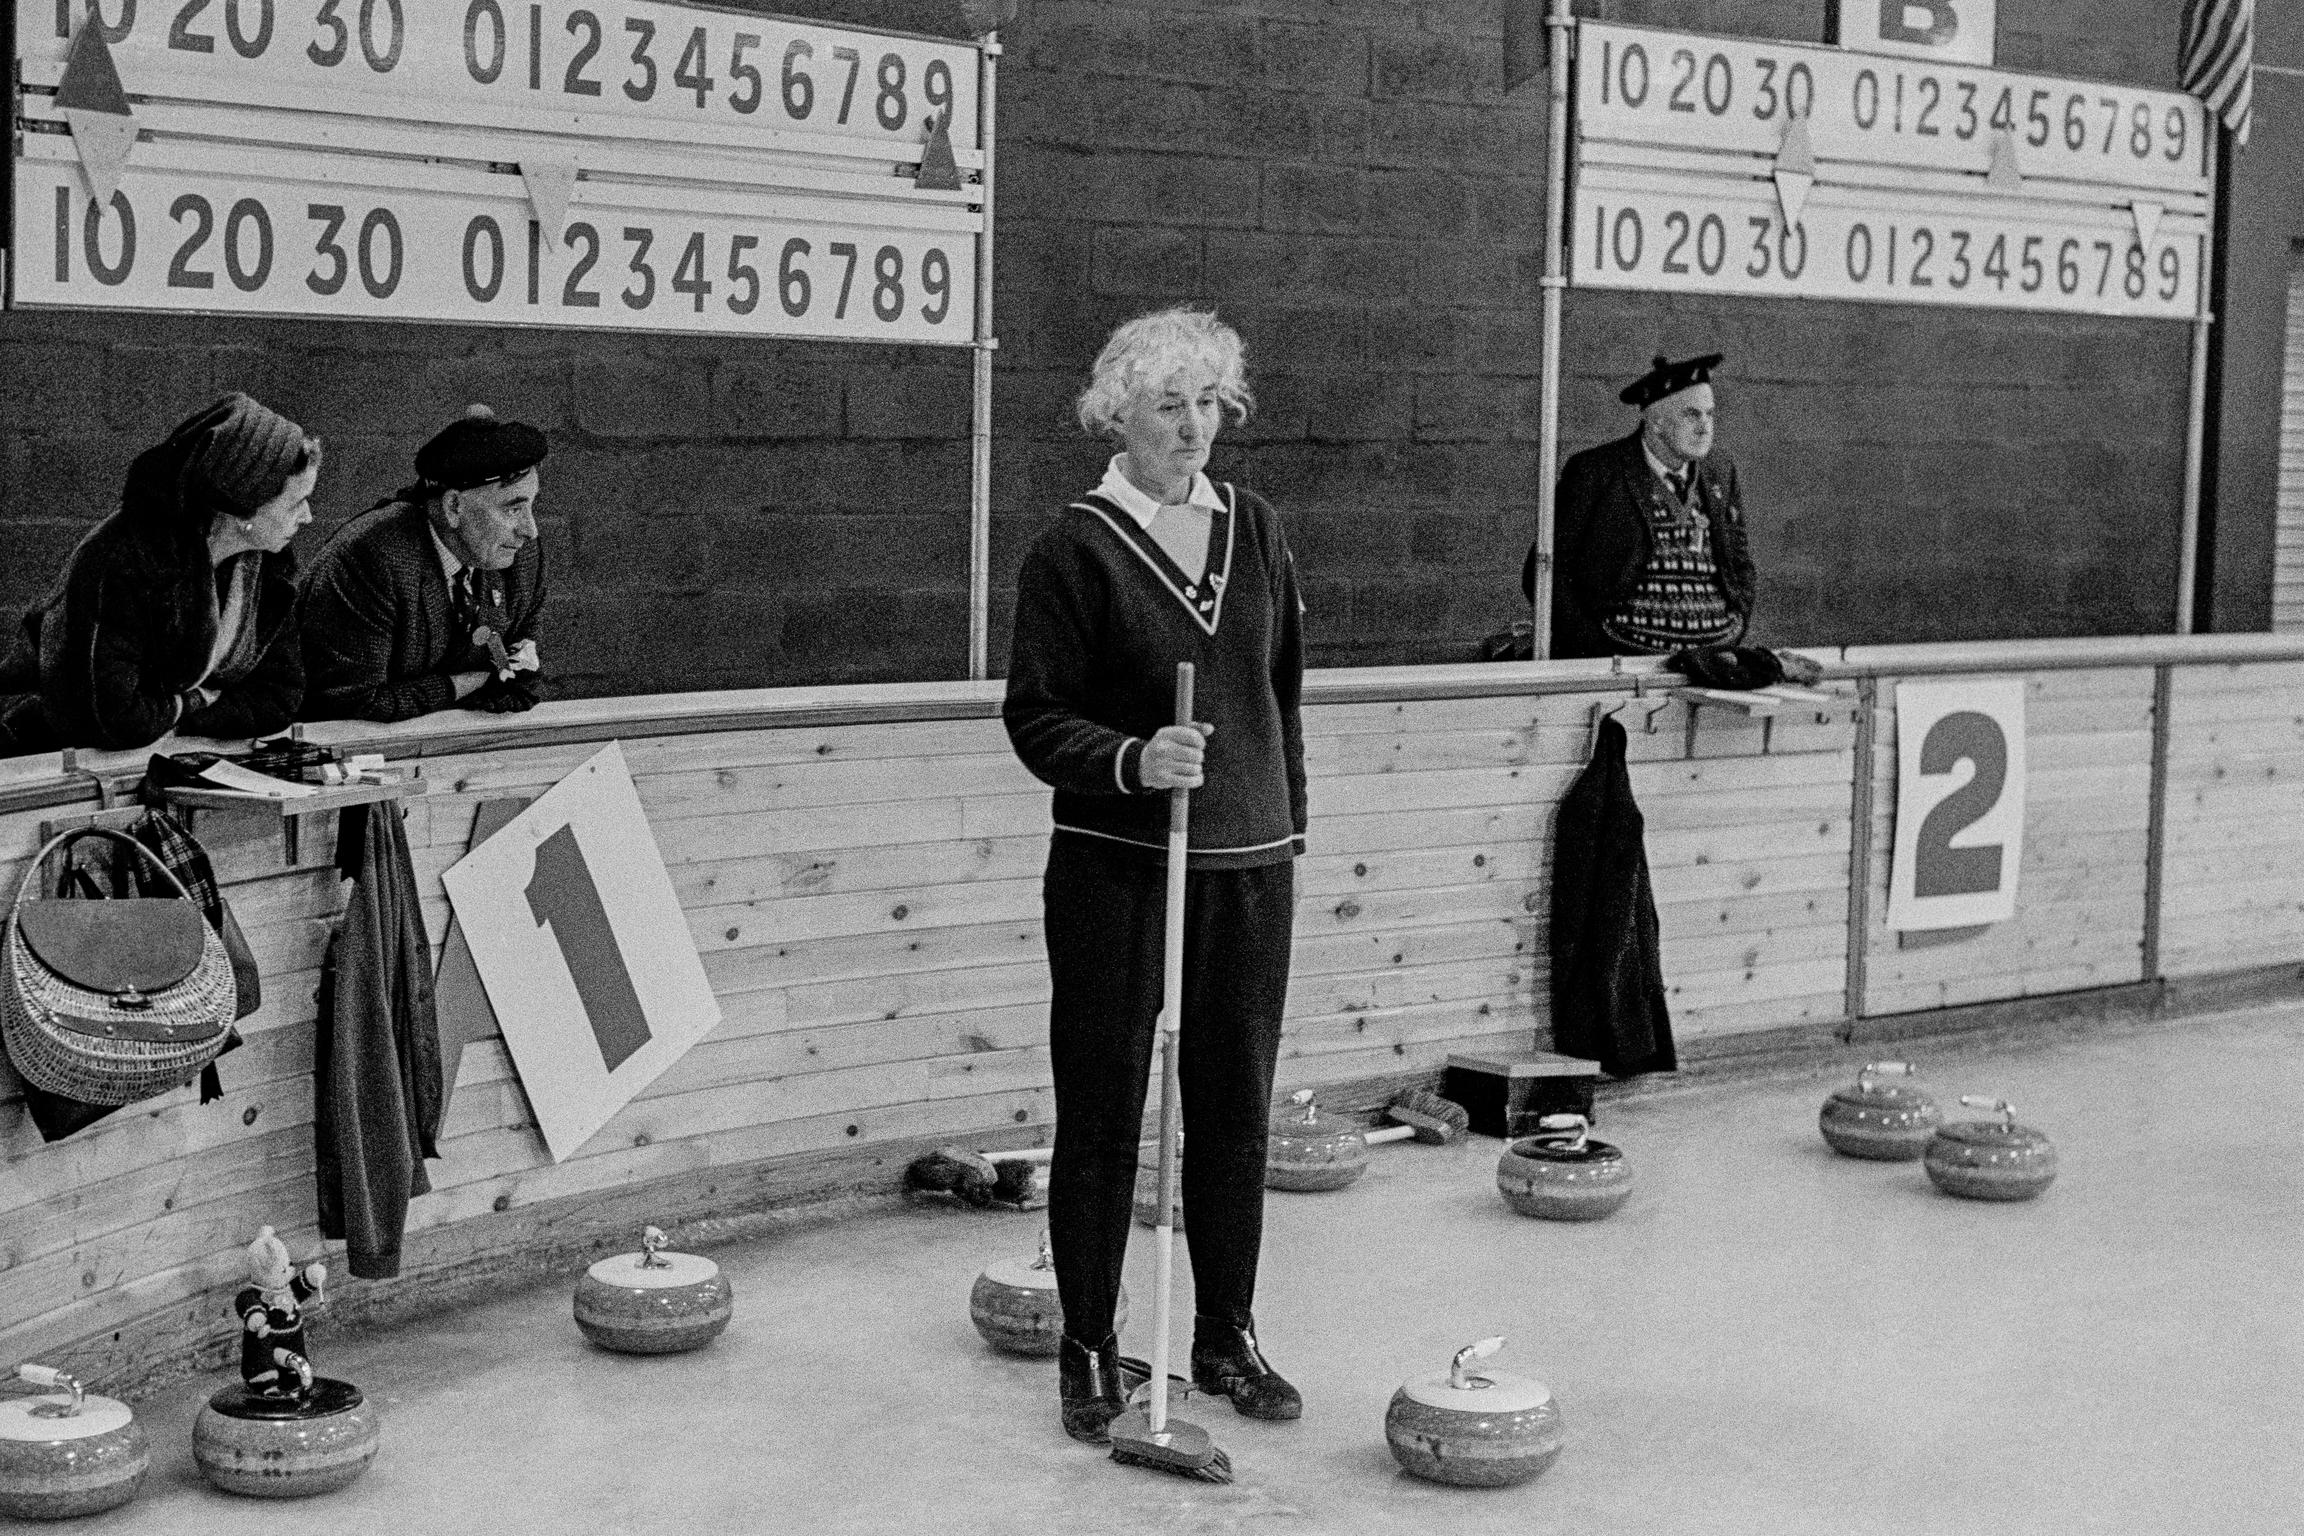 Curling, Scotland's major sport. Scotland